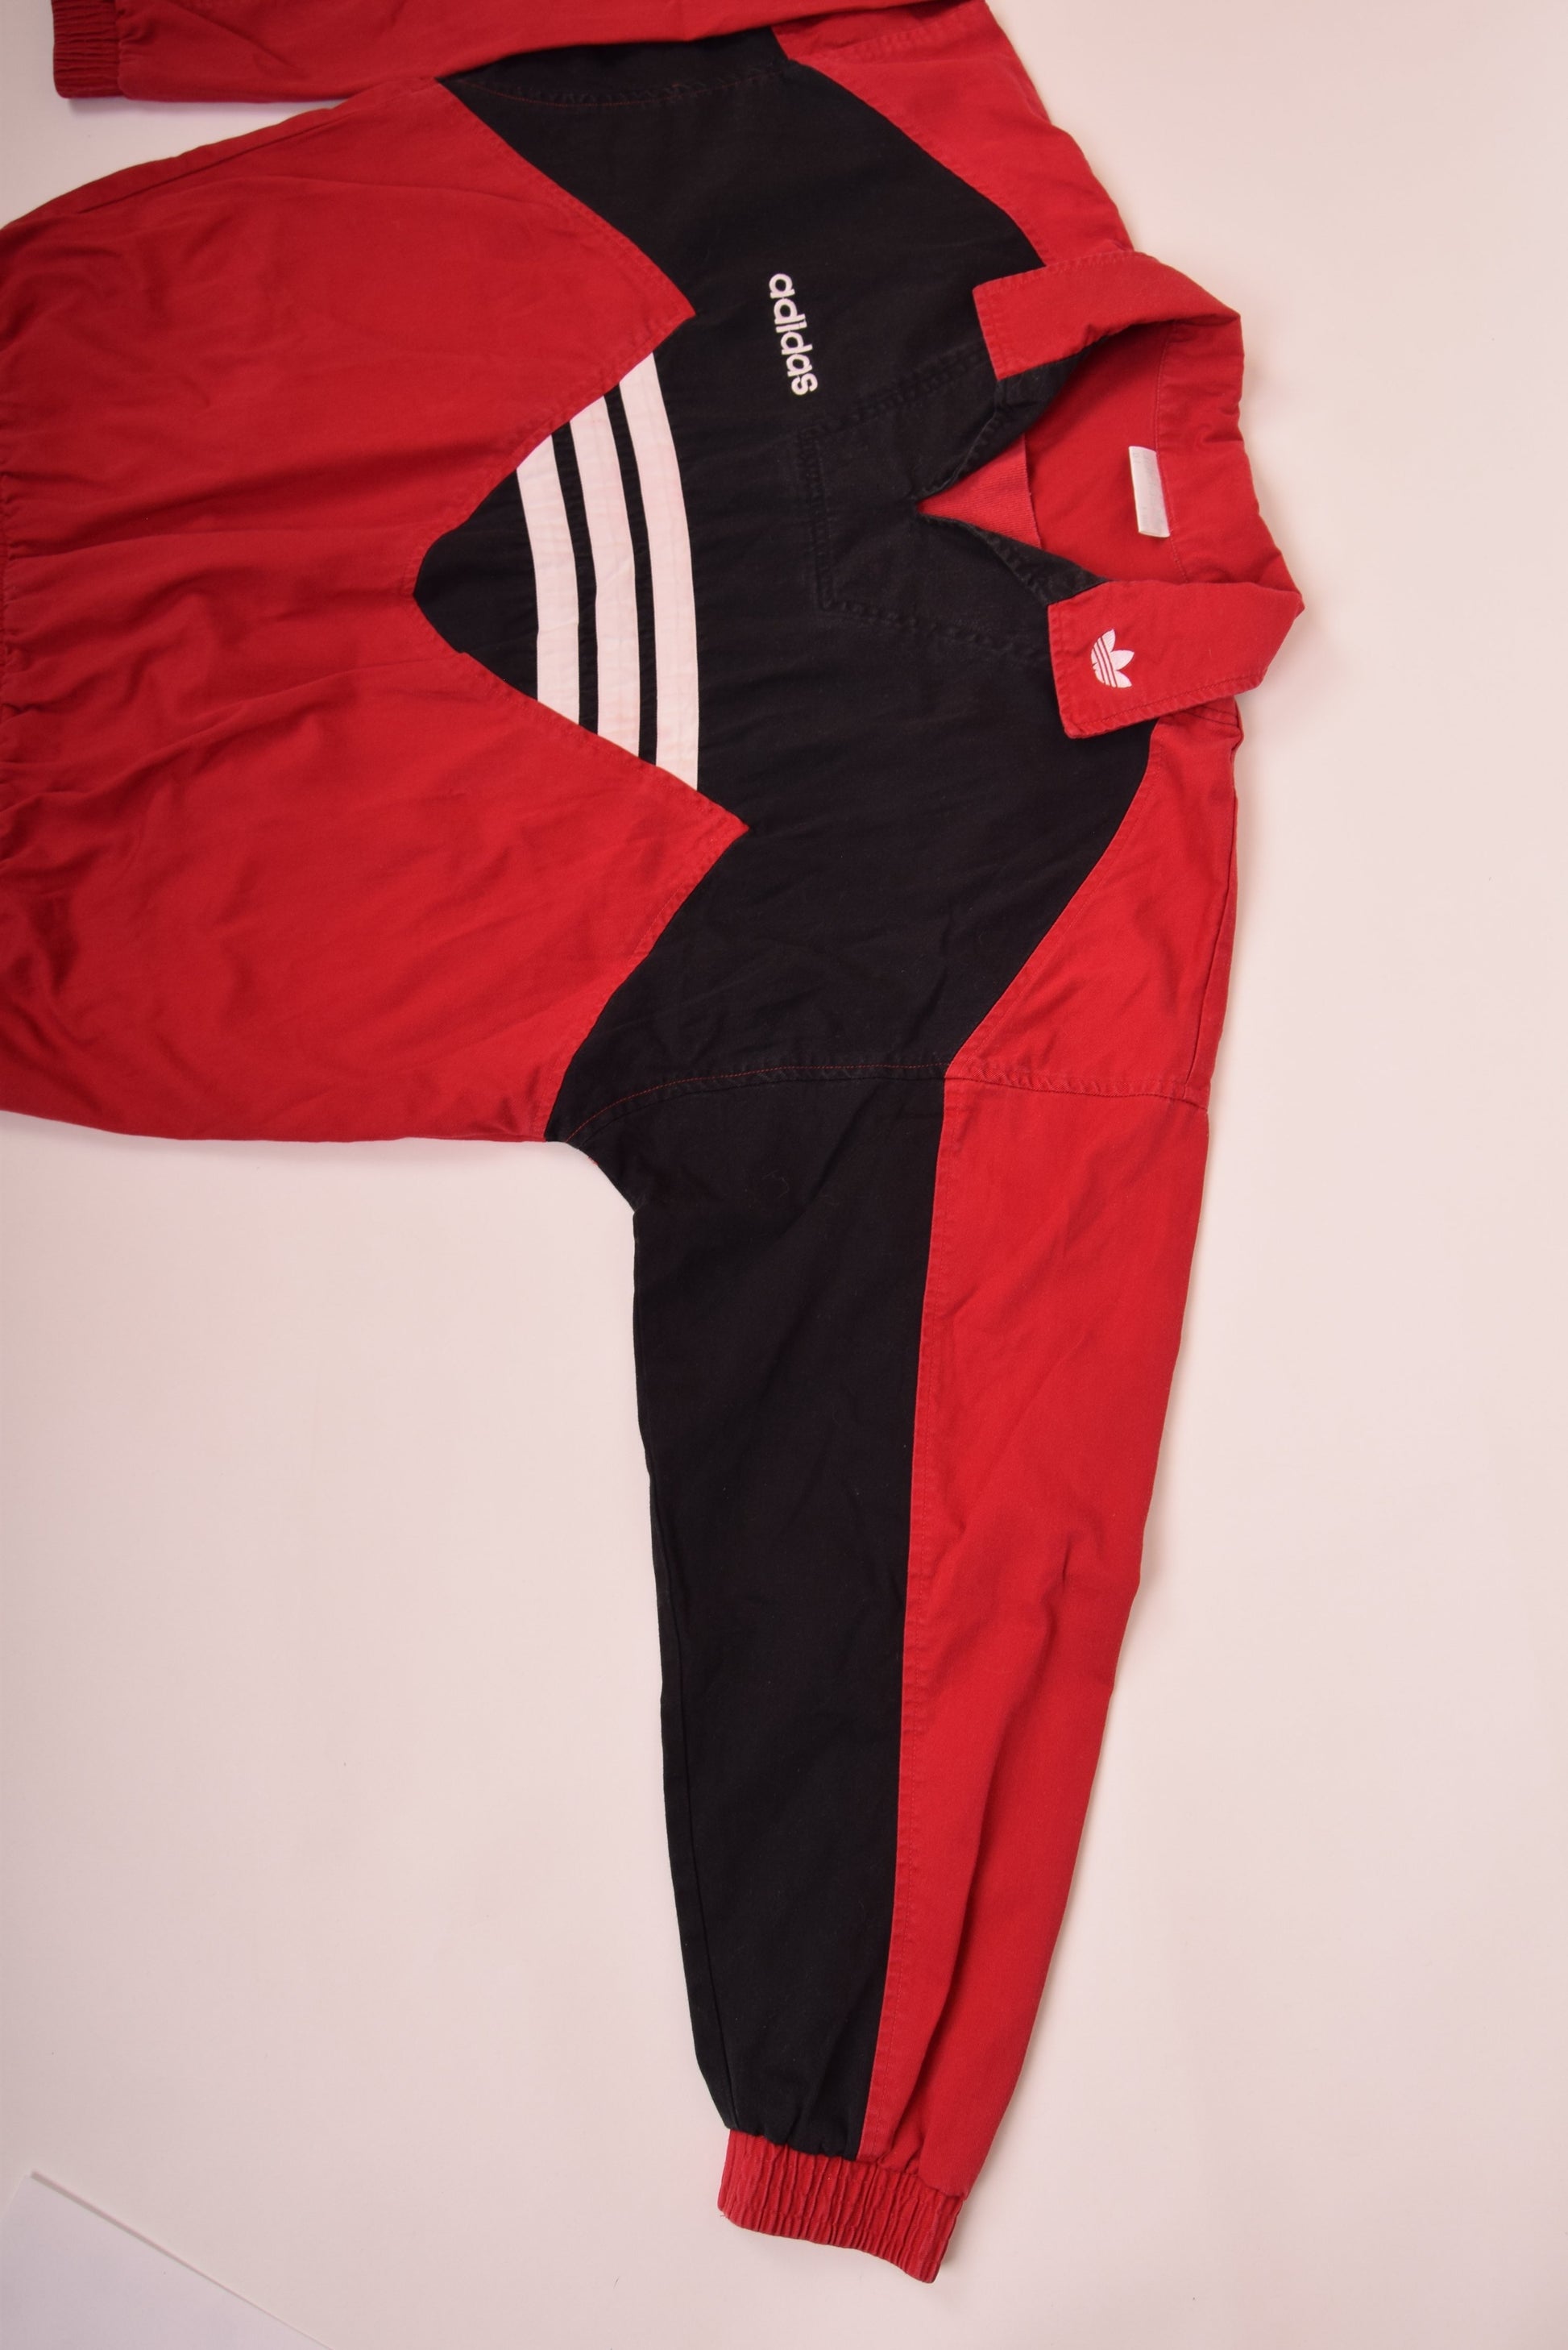 Vintage Adidas 90's Sweatshirt Red Black Size L - XL